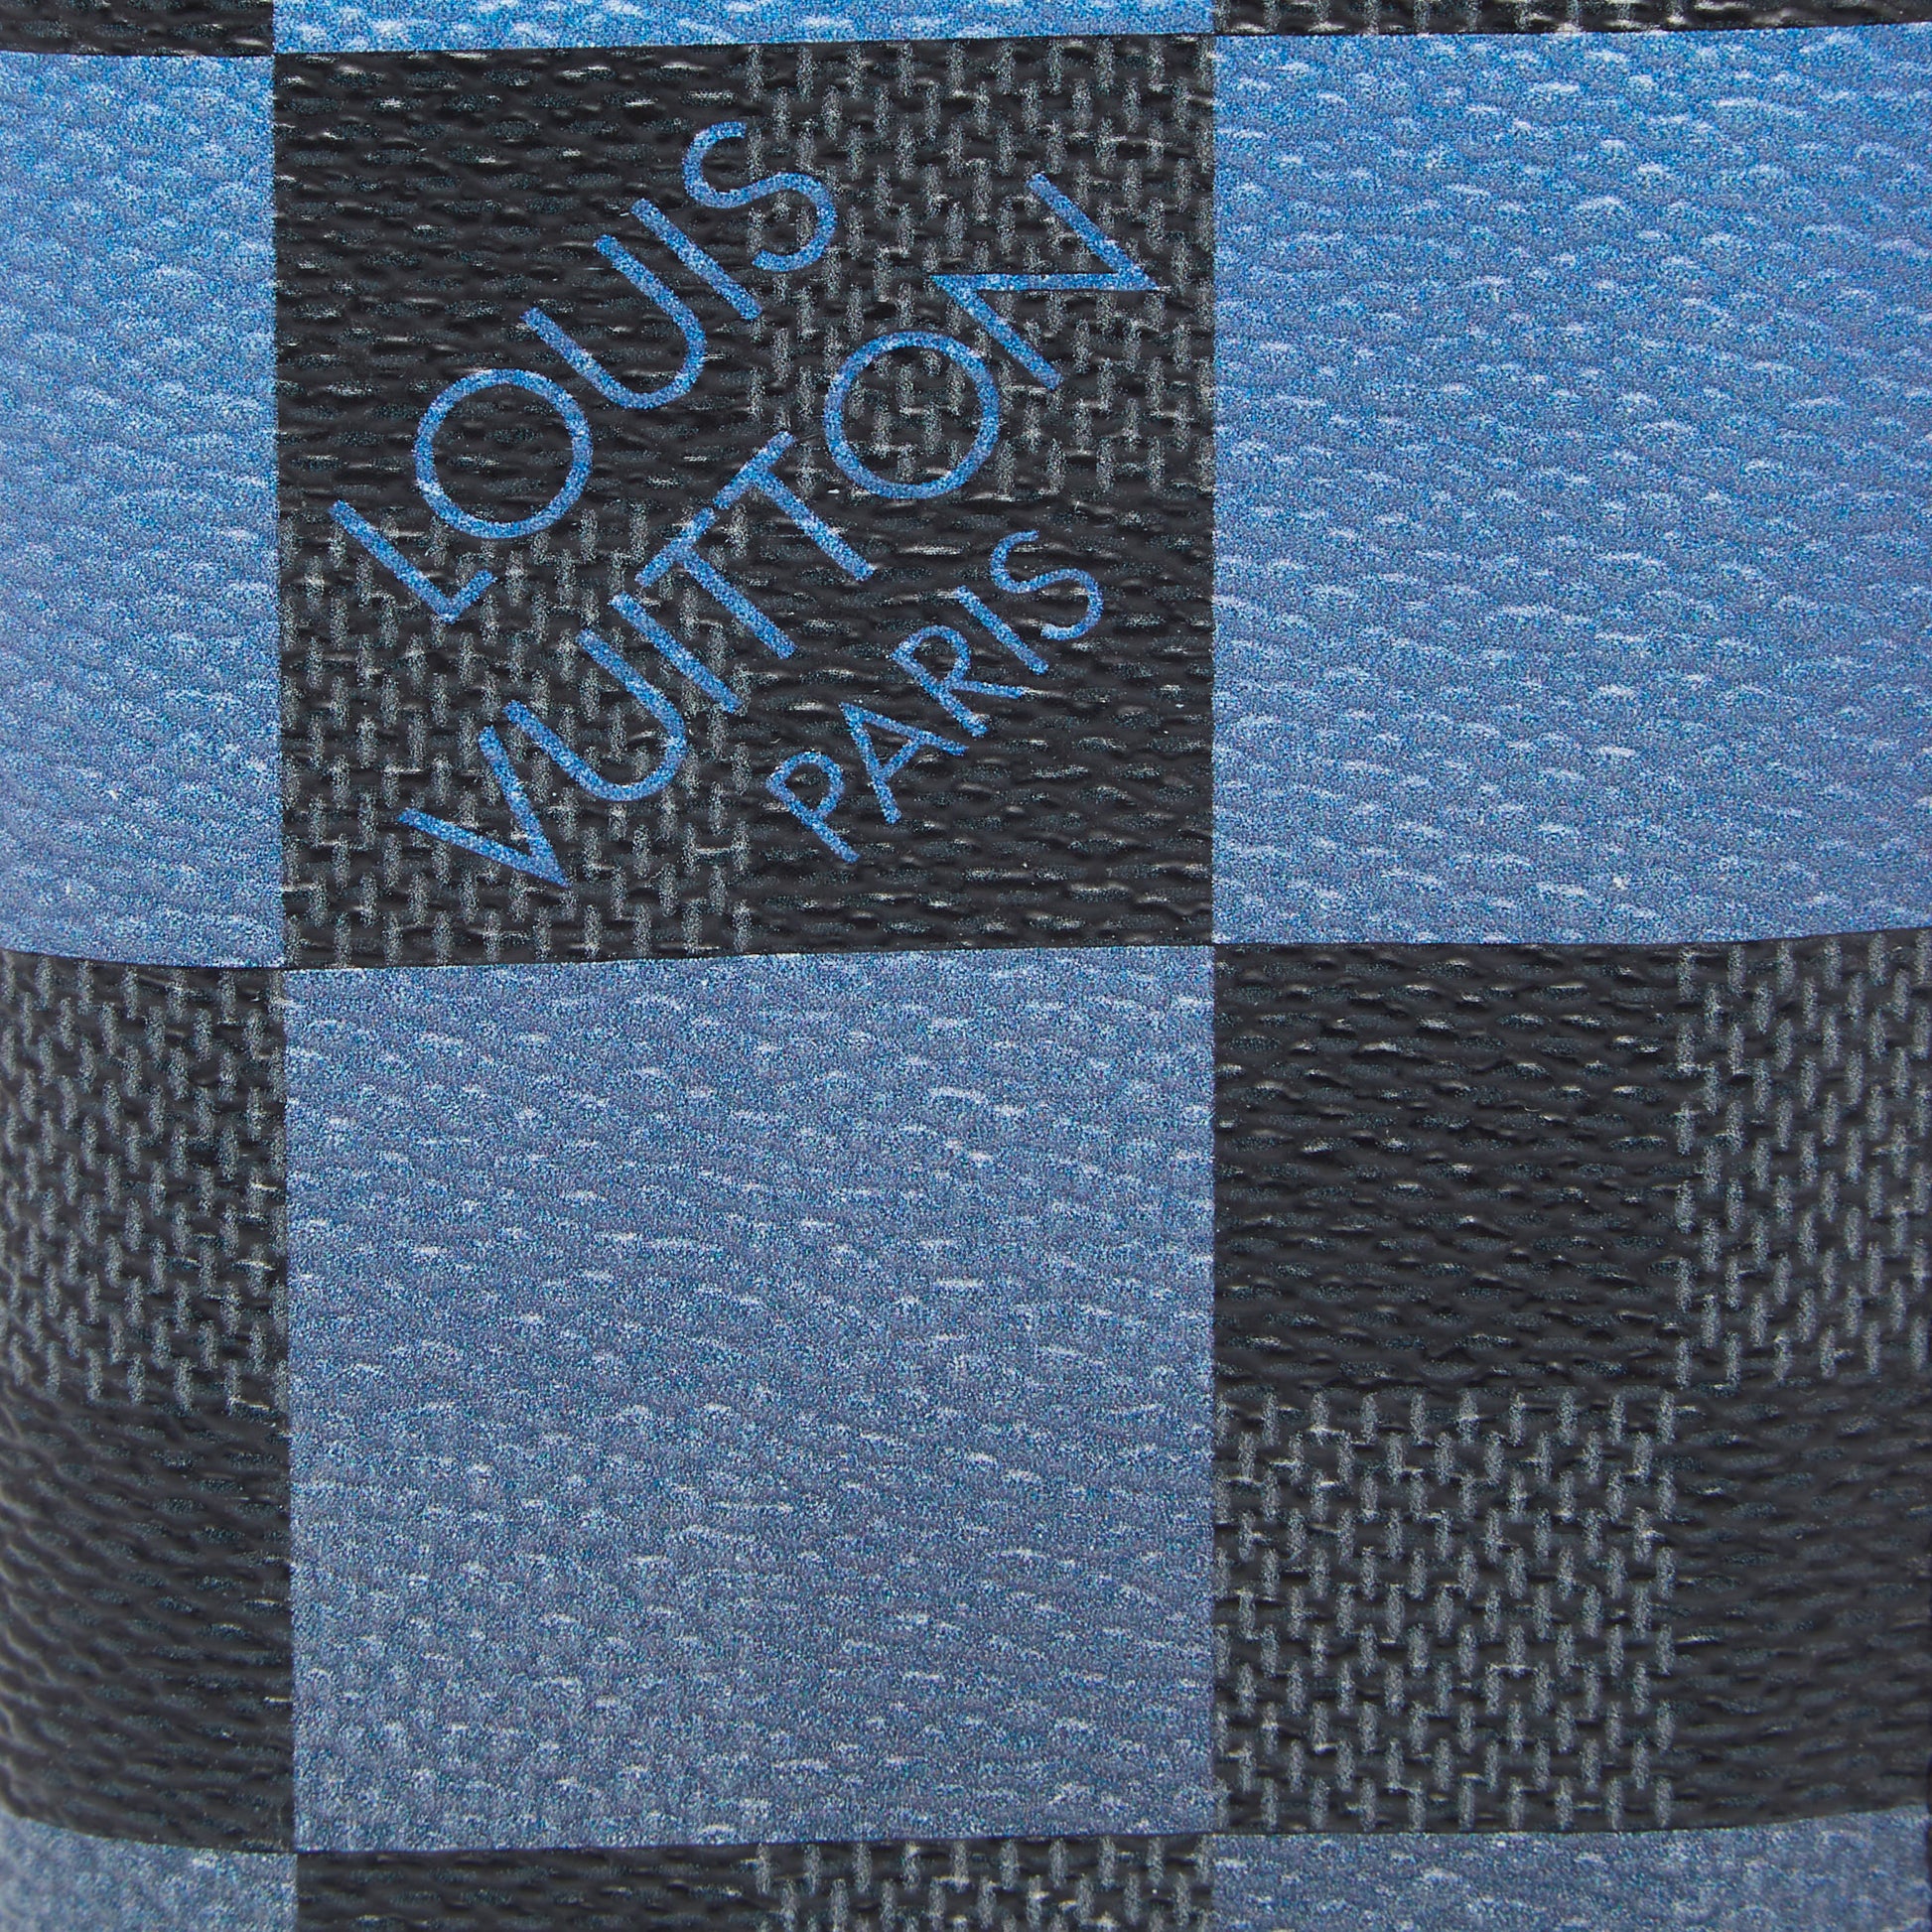 Louis Vuitton Pocket Organizer Blue Damier Graphite Giant coated